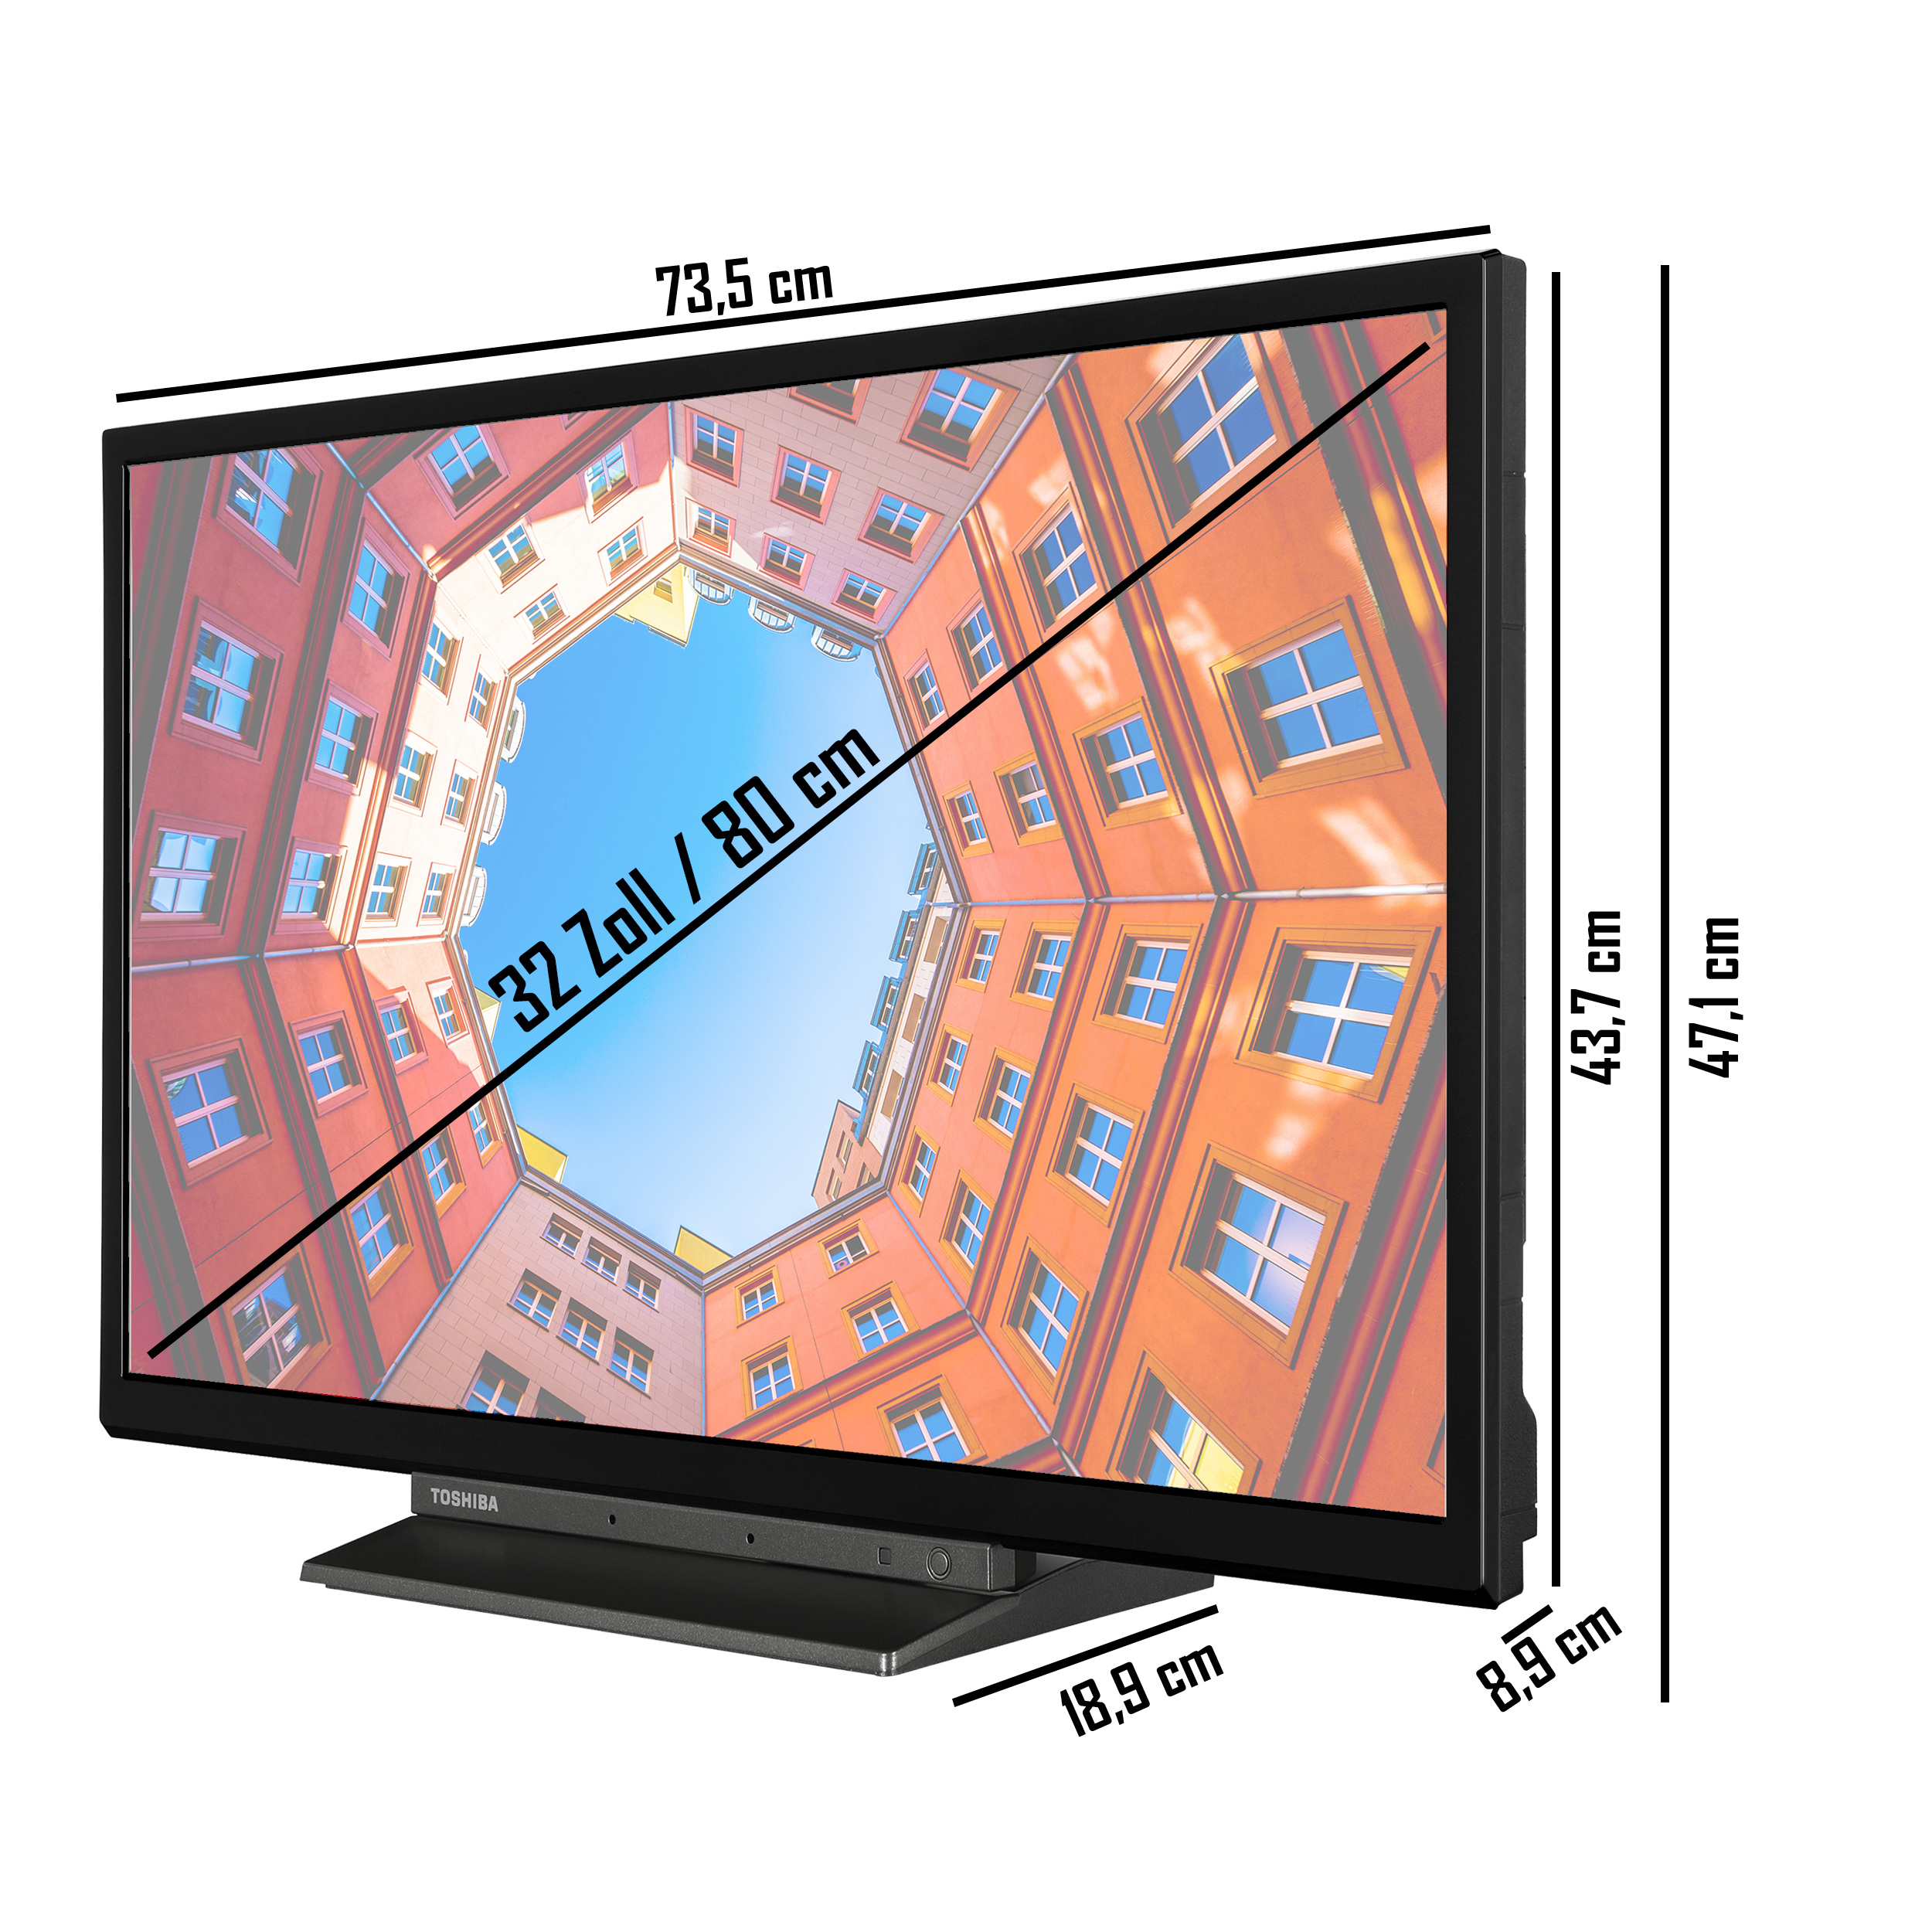 (Flat, TV TV) Full-HD, LED TOSHIBA 32LK3C63DA SMART